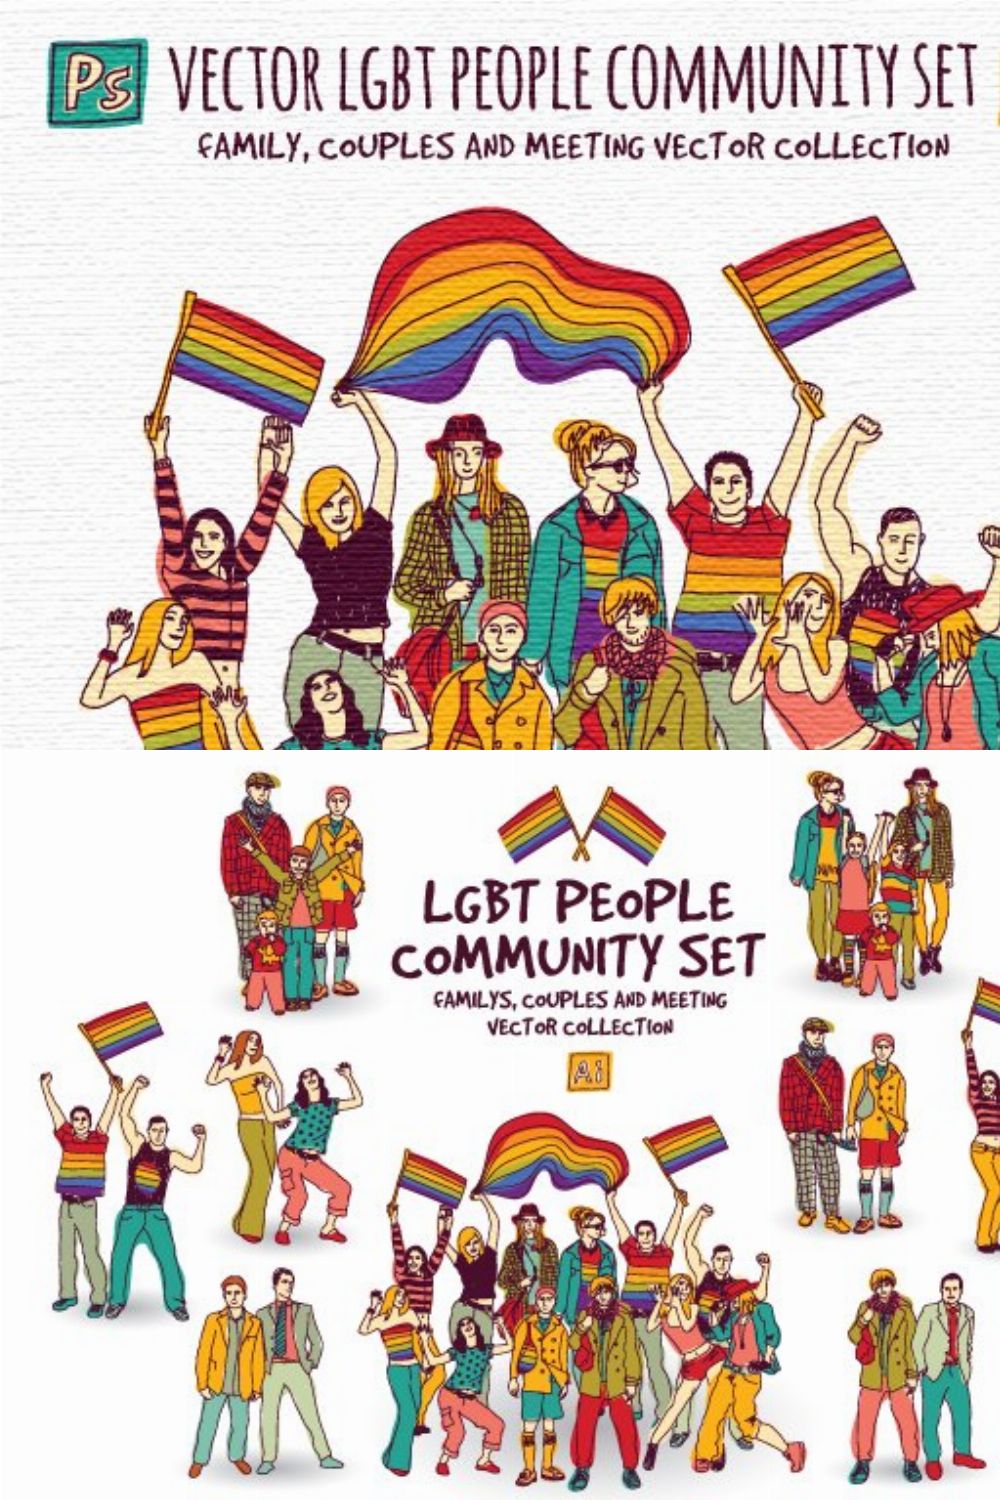 Vector LGBT people community set pinterest preview image.